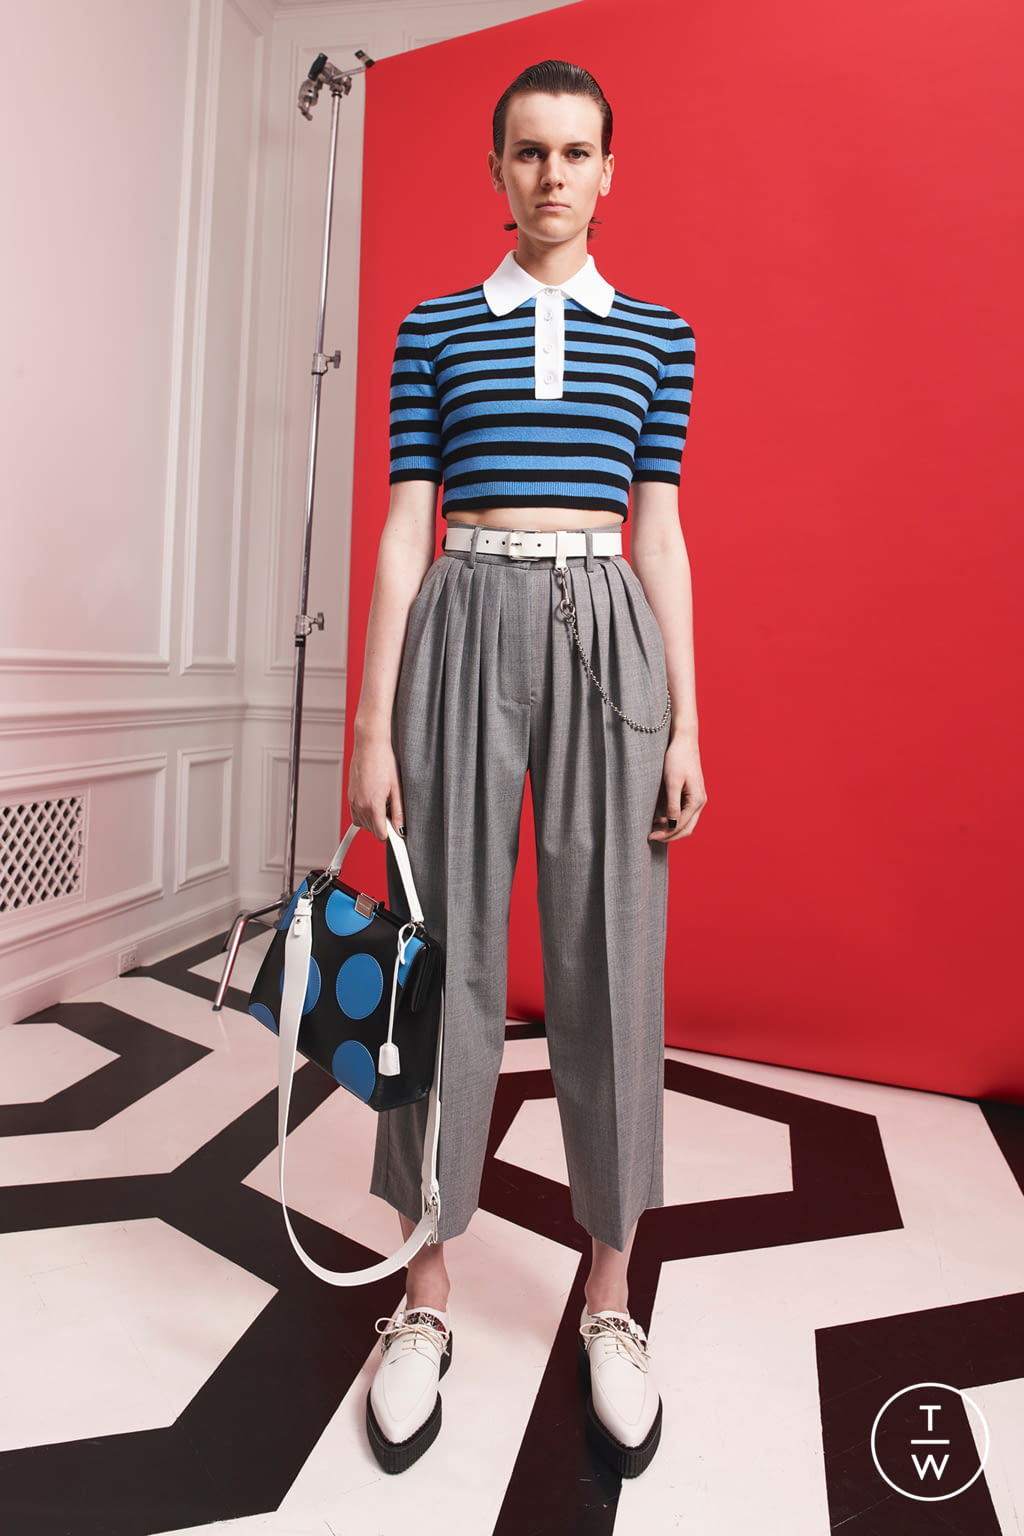 Michael Kors Collection RS20 womenswear #23 - Tagwalk: The Fashion ...